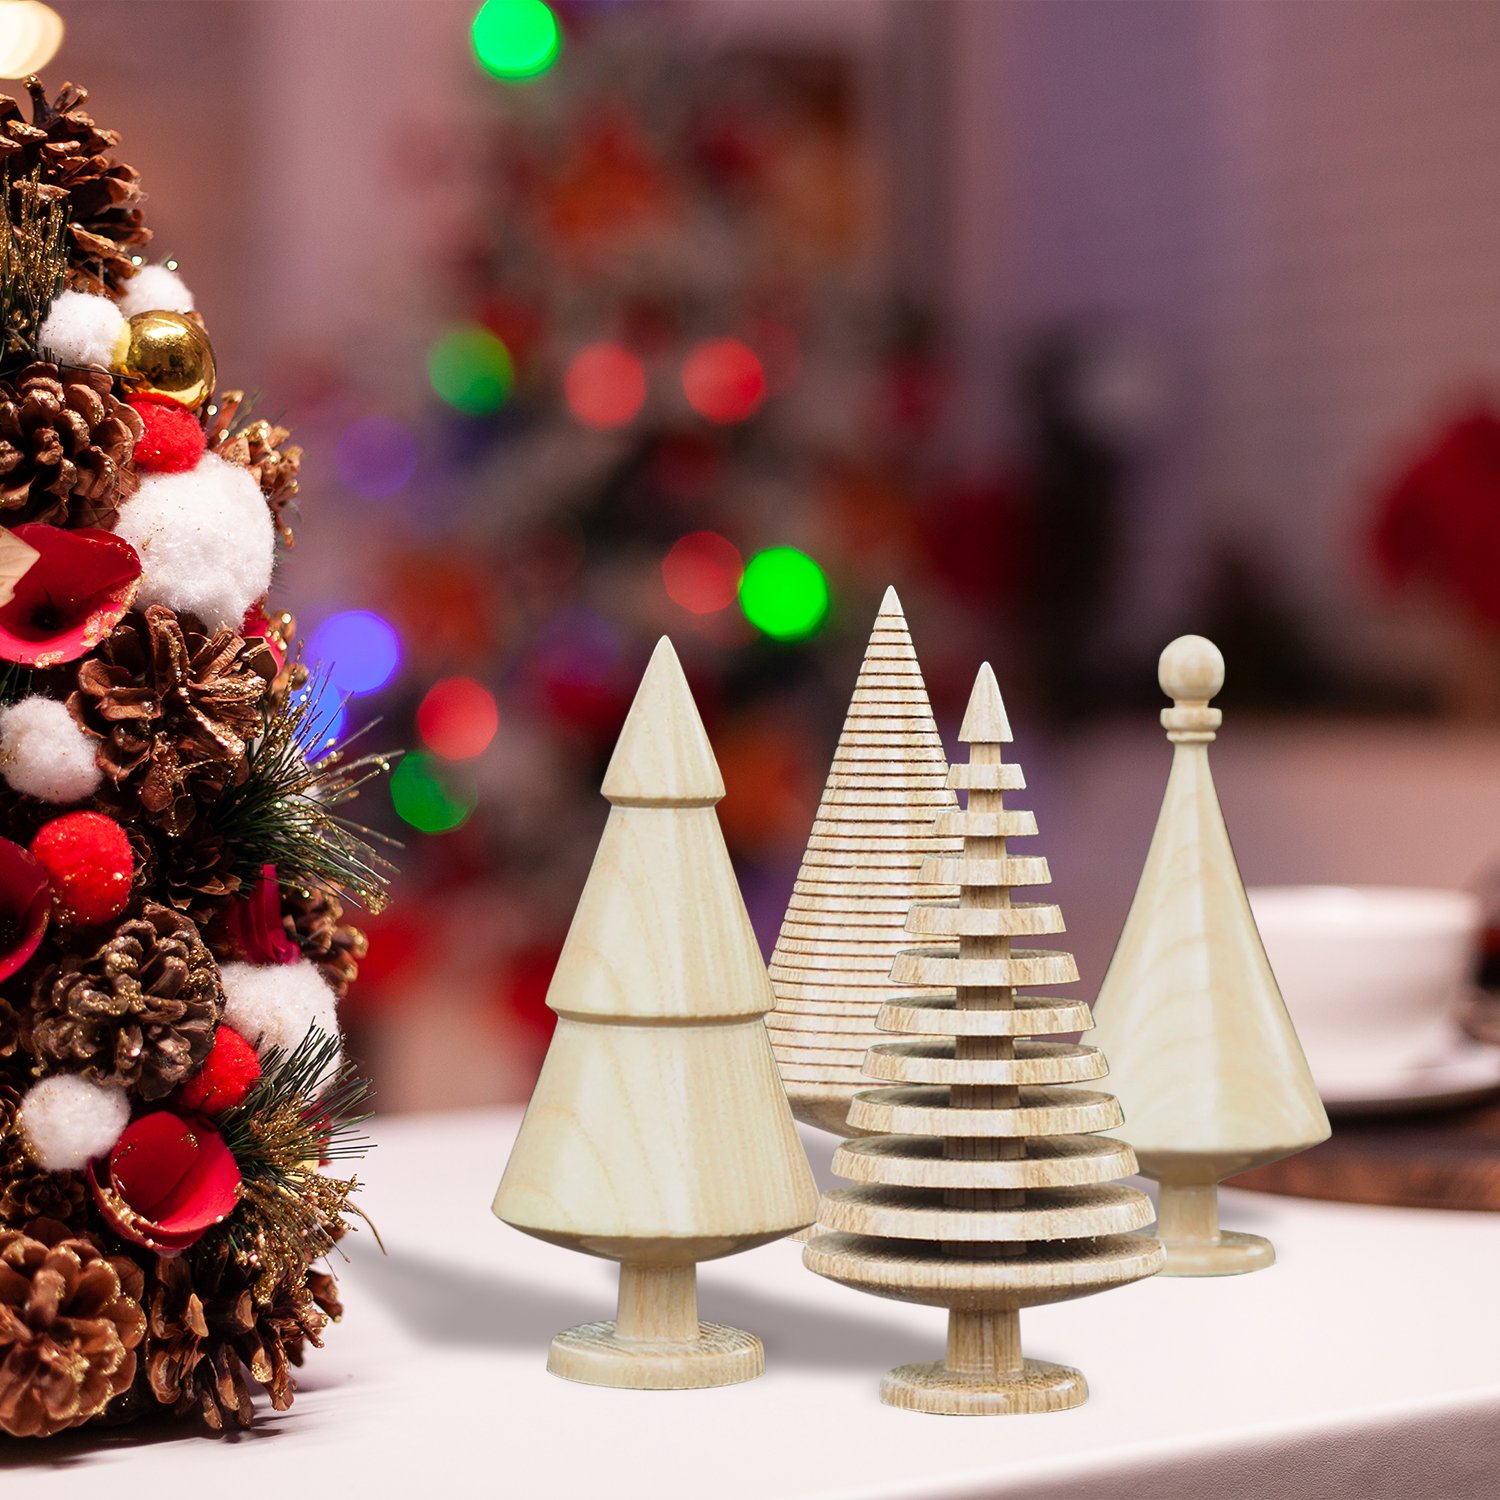 Handmade Wooden Christmas Trees – Scandi Style Christmas Table Decor Ornament